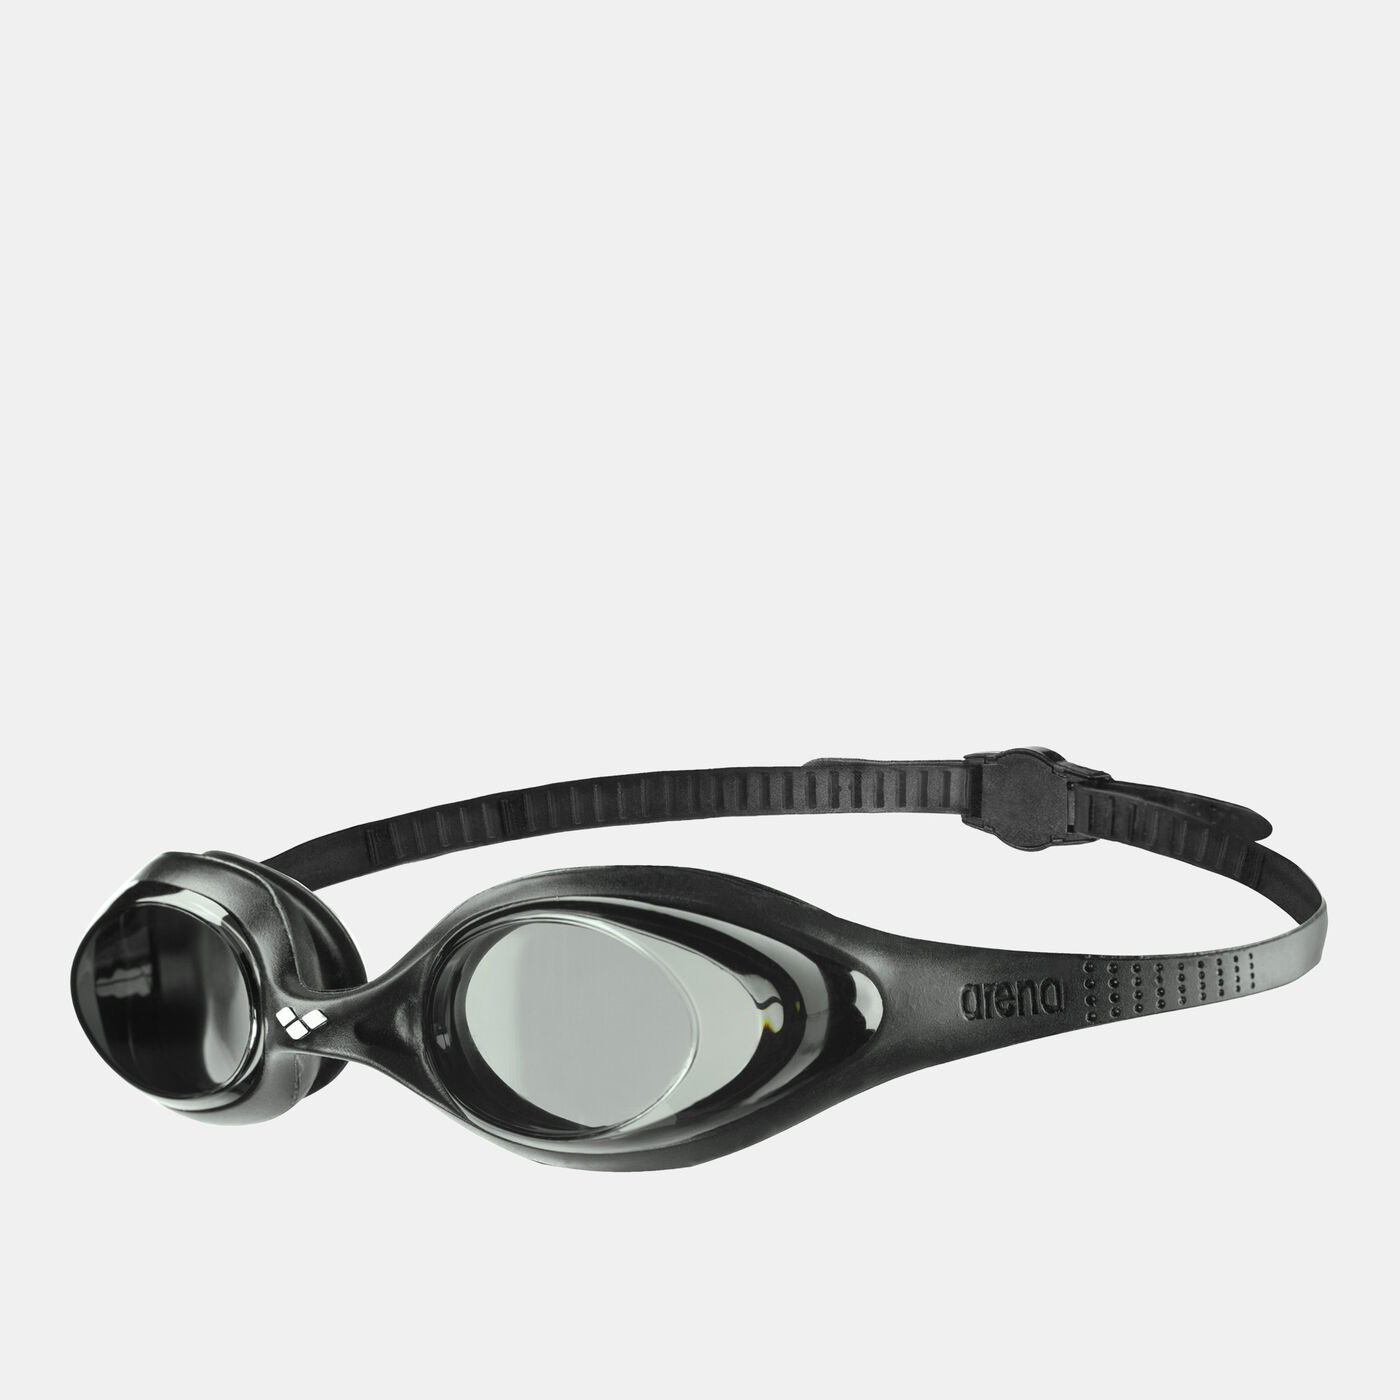 Spider Swimming Goggles